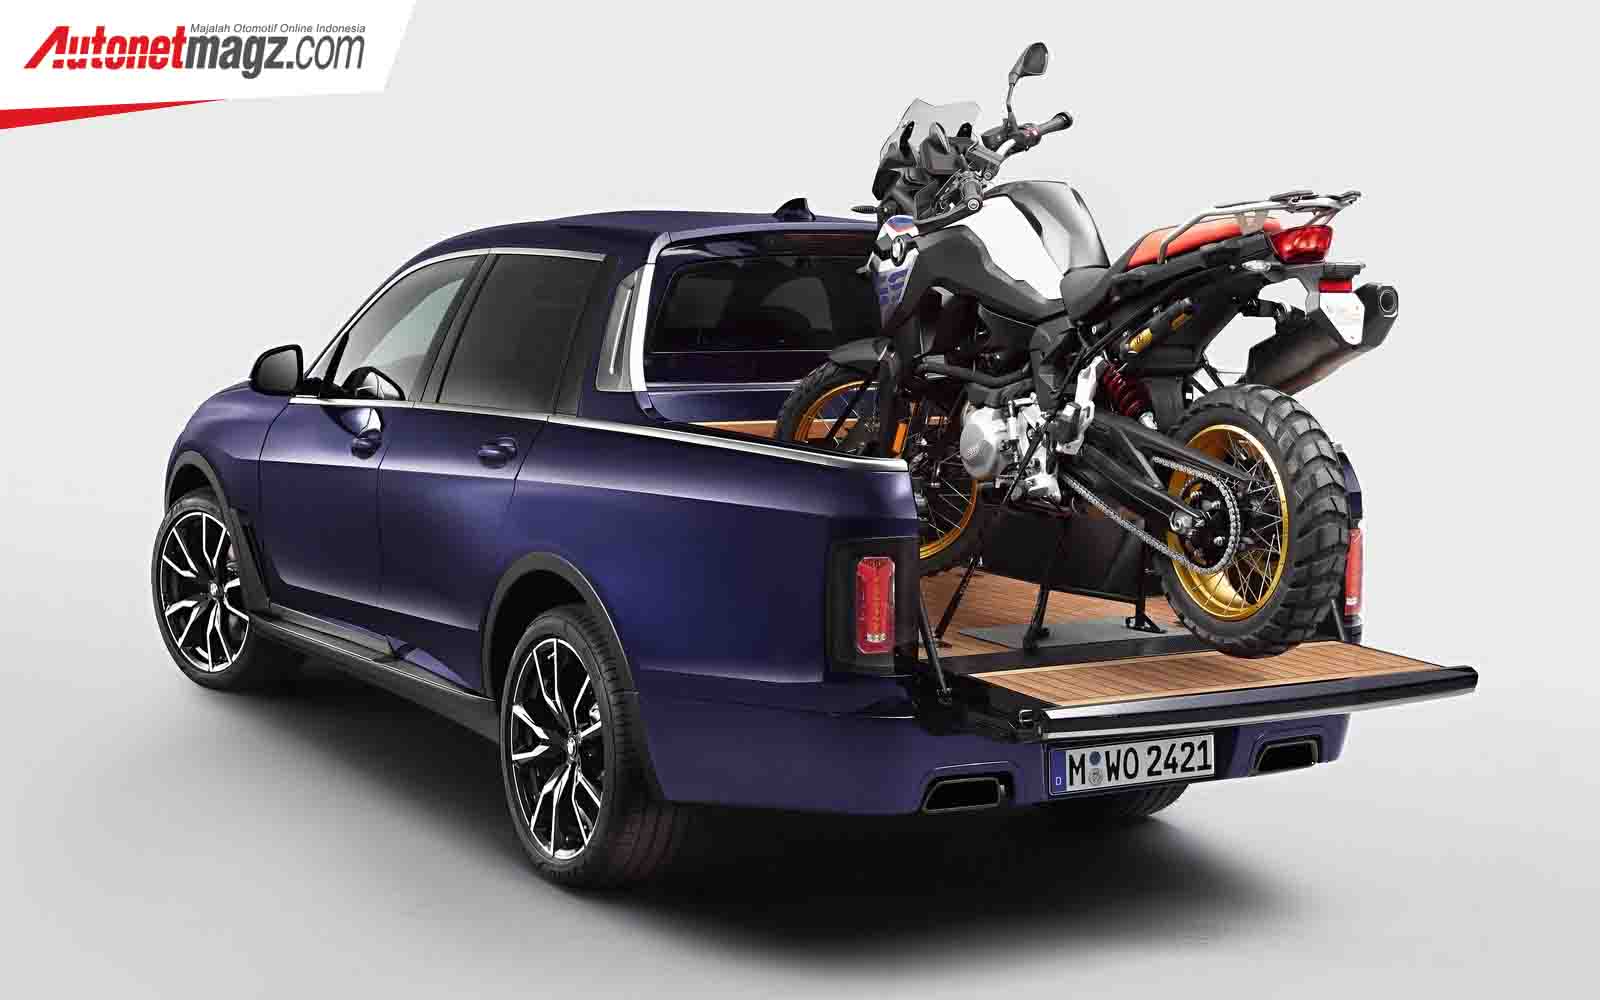 Berita, Spesifikasi BMW X7 Pickup Concept: BMW X7 Pick-up Concept : Bisa Bawa Motor Di Bak belakang!